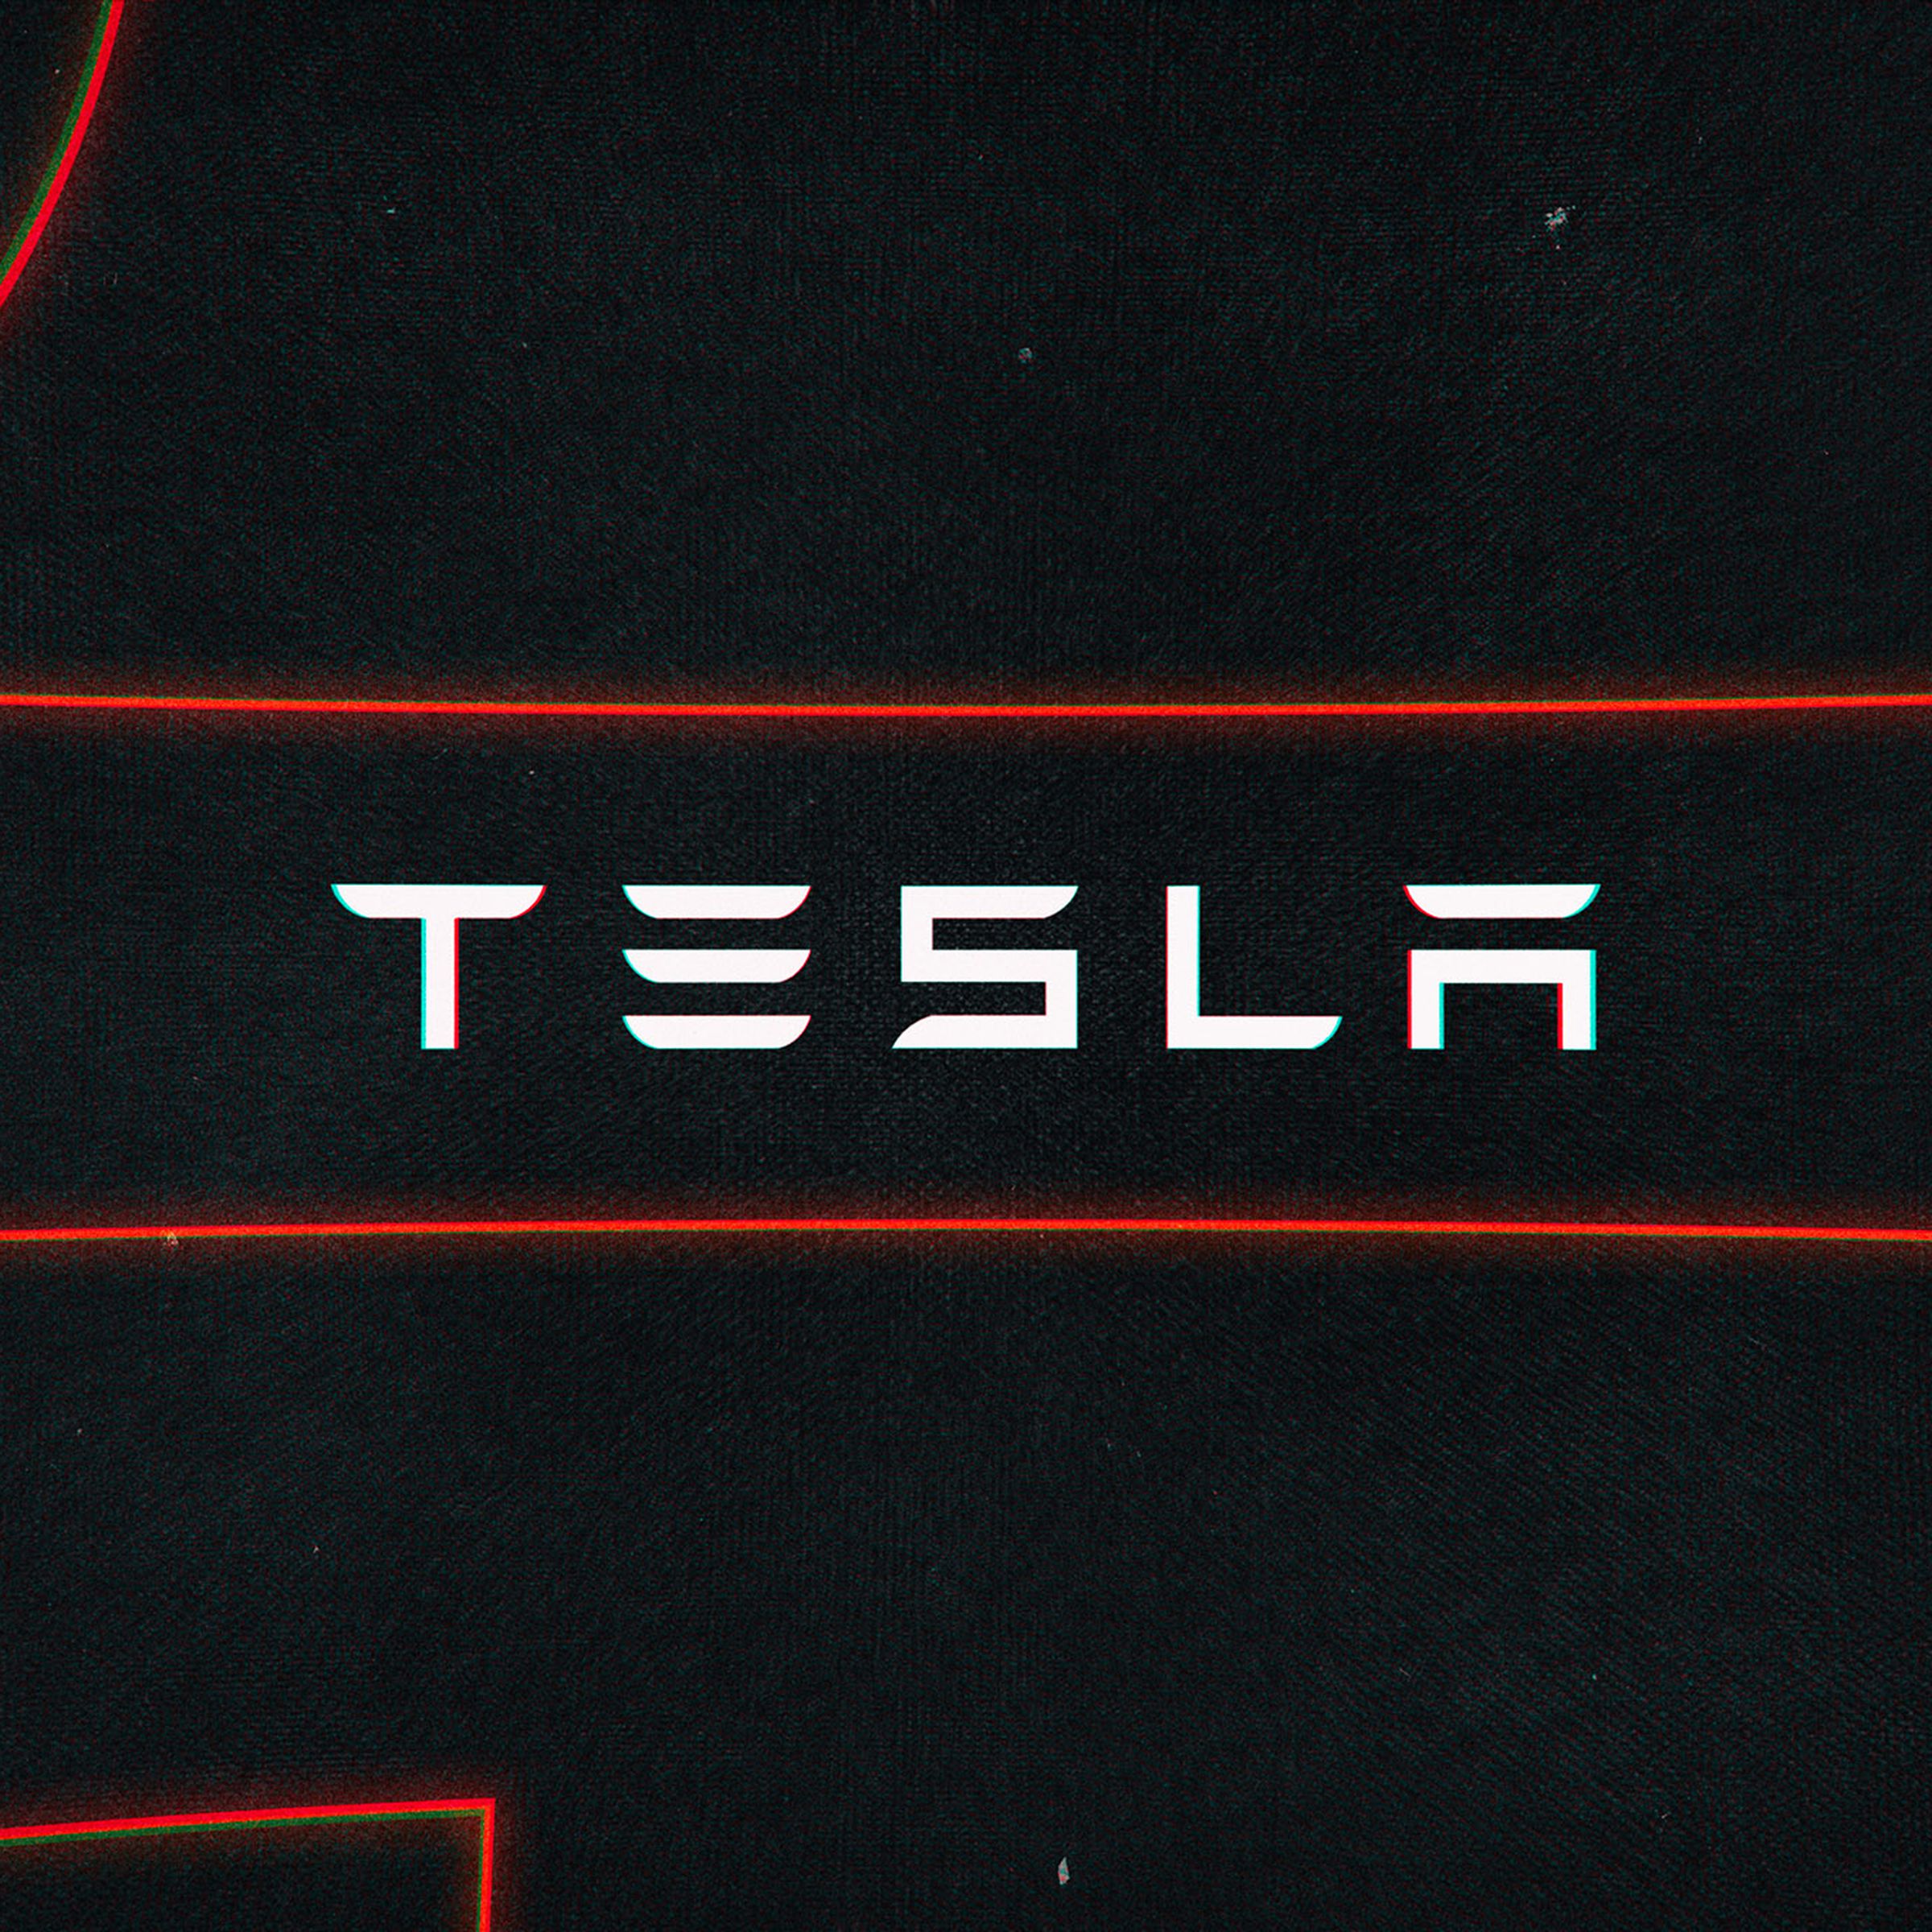 Illustration featuring the Tesla wordmark logo